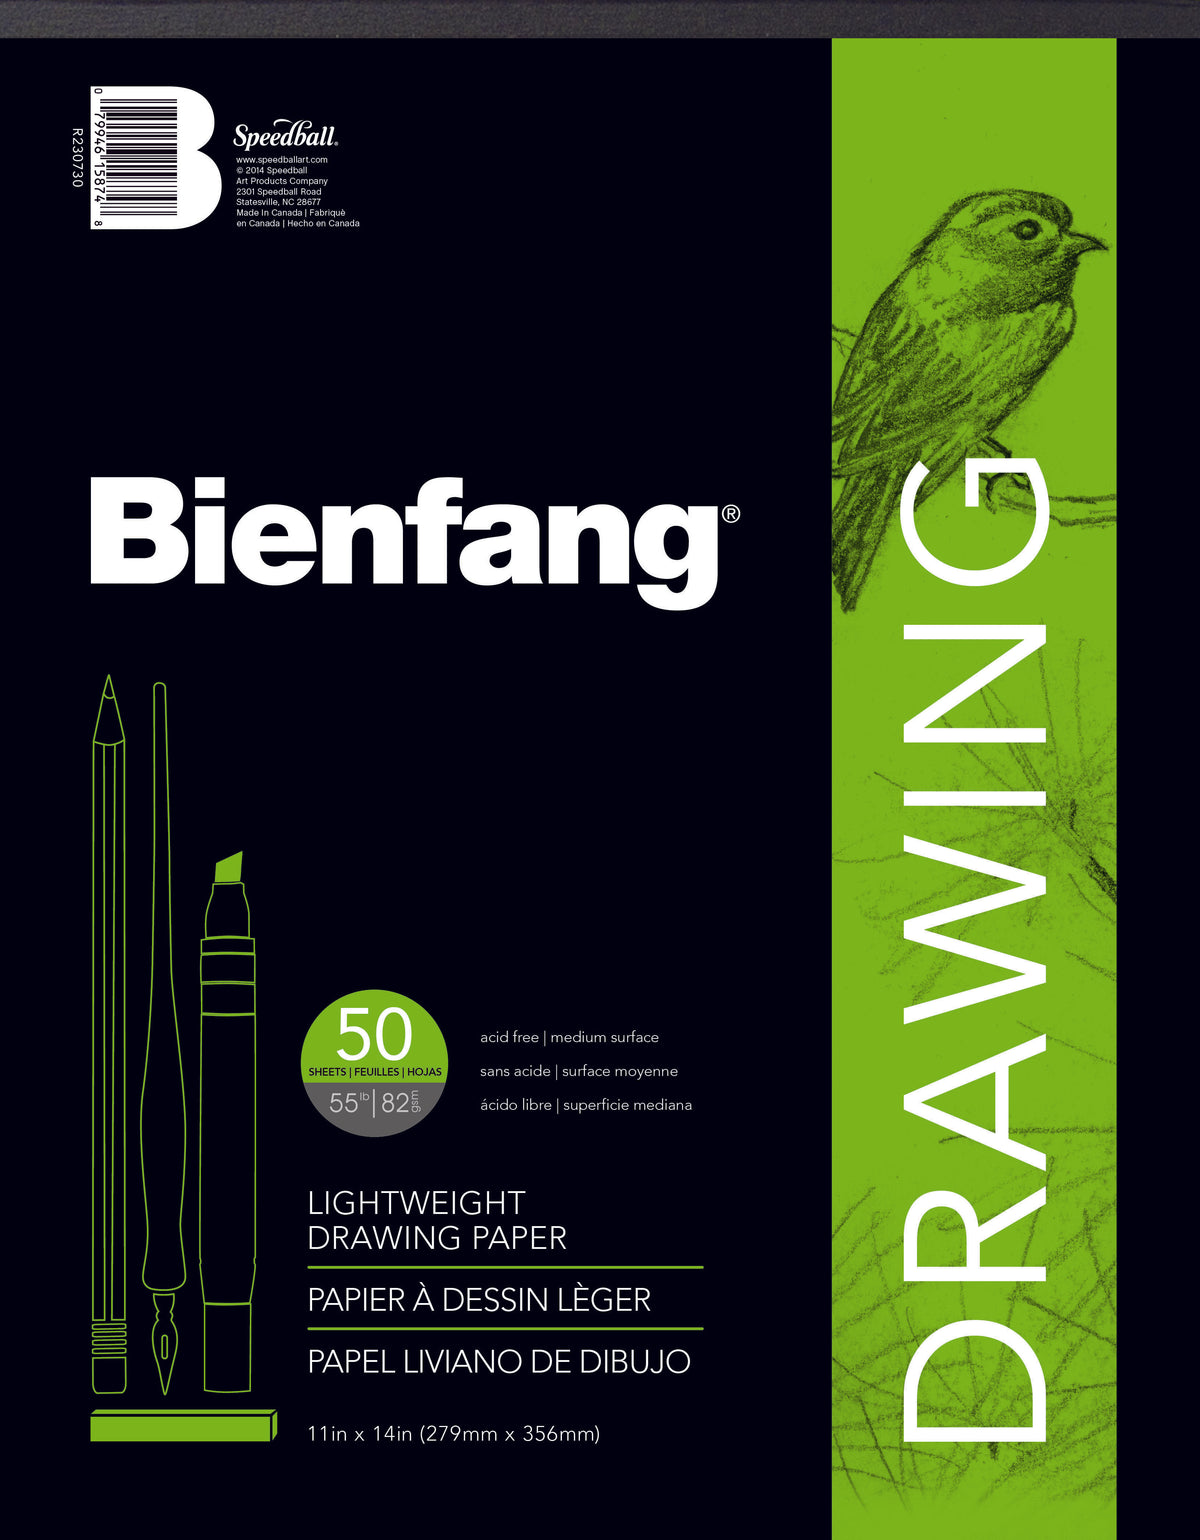 Bienfang - Lightweight Drawing Paper